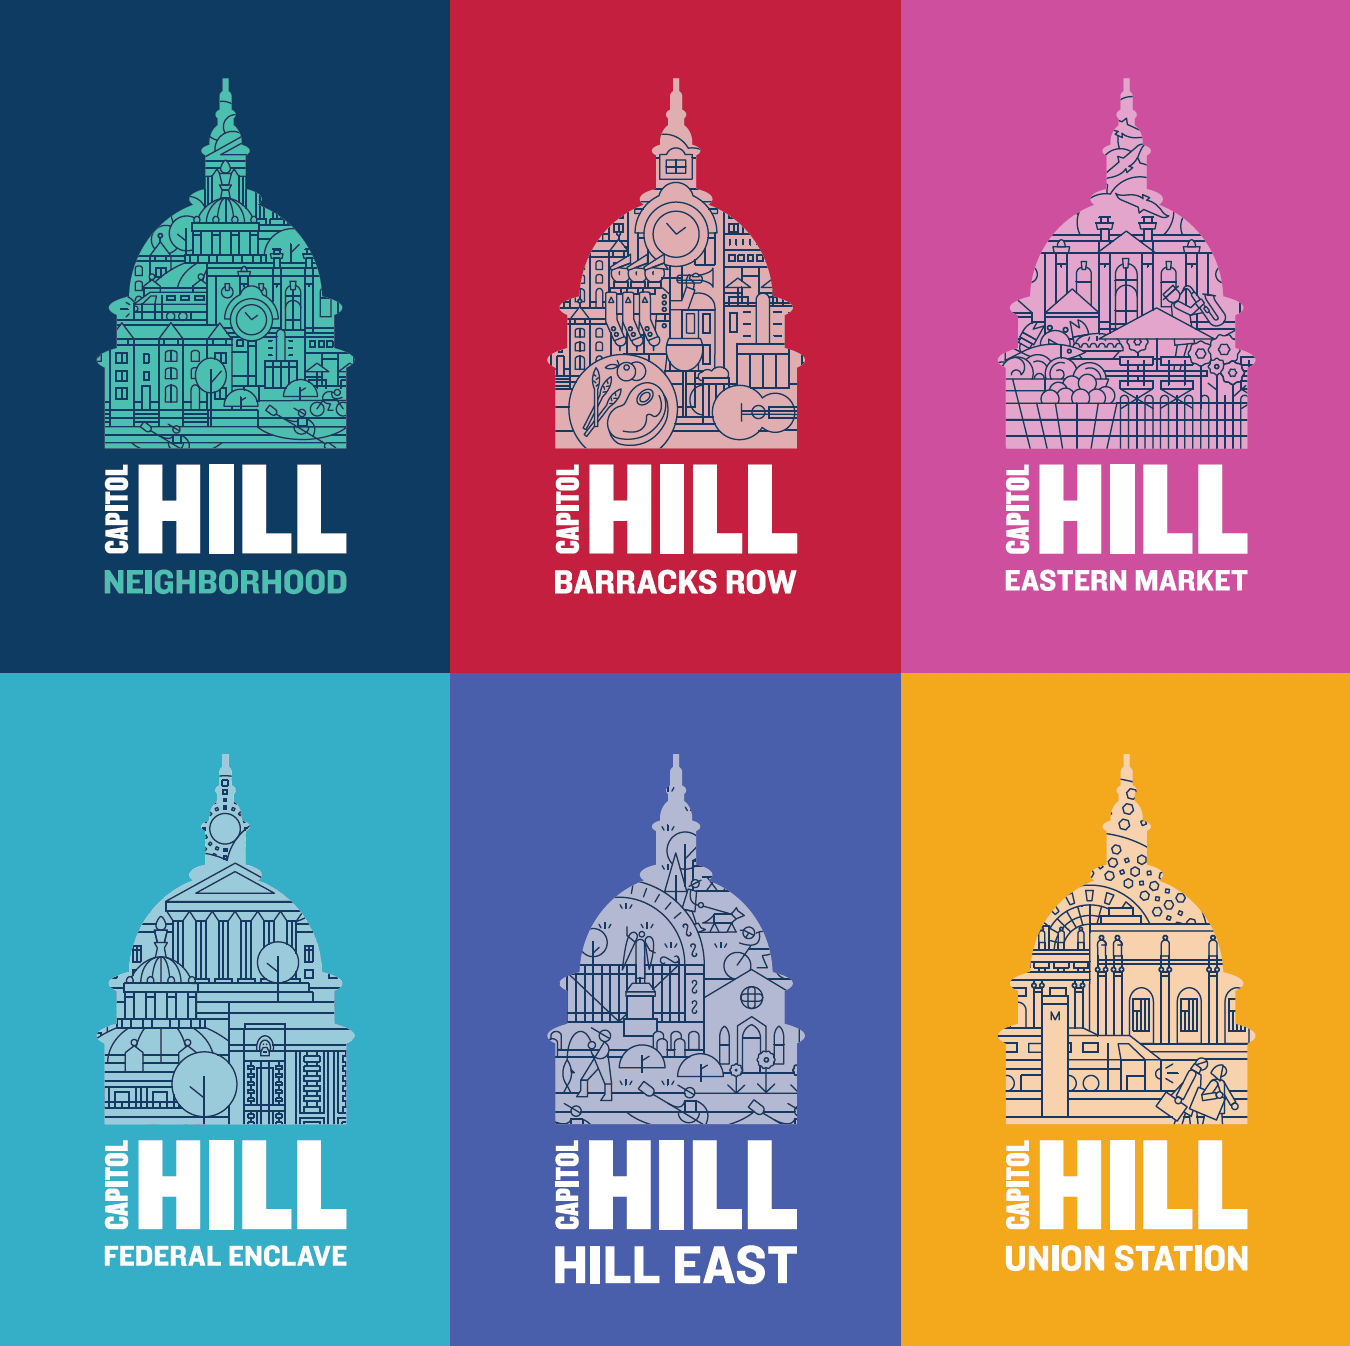 Capitol Hill Business Improvement District